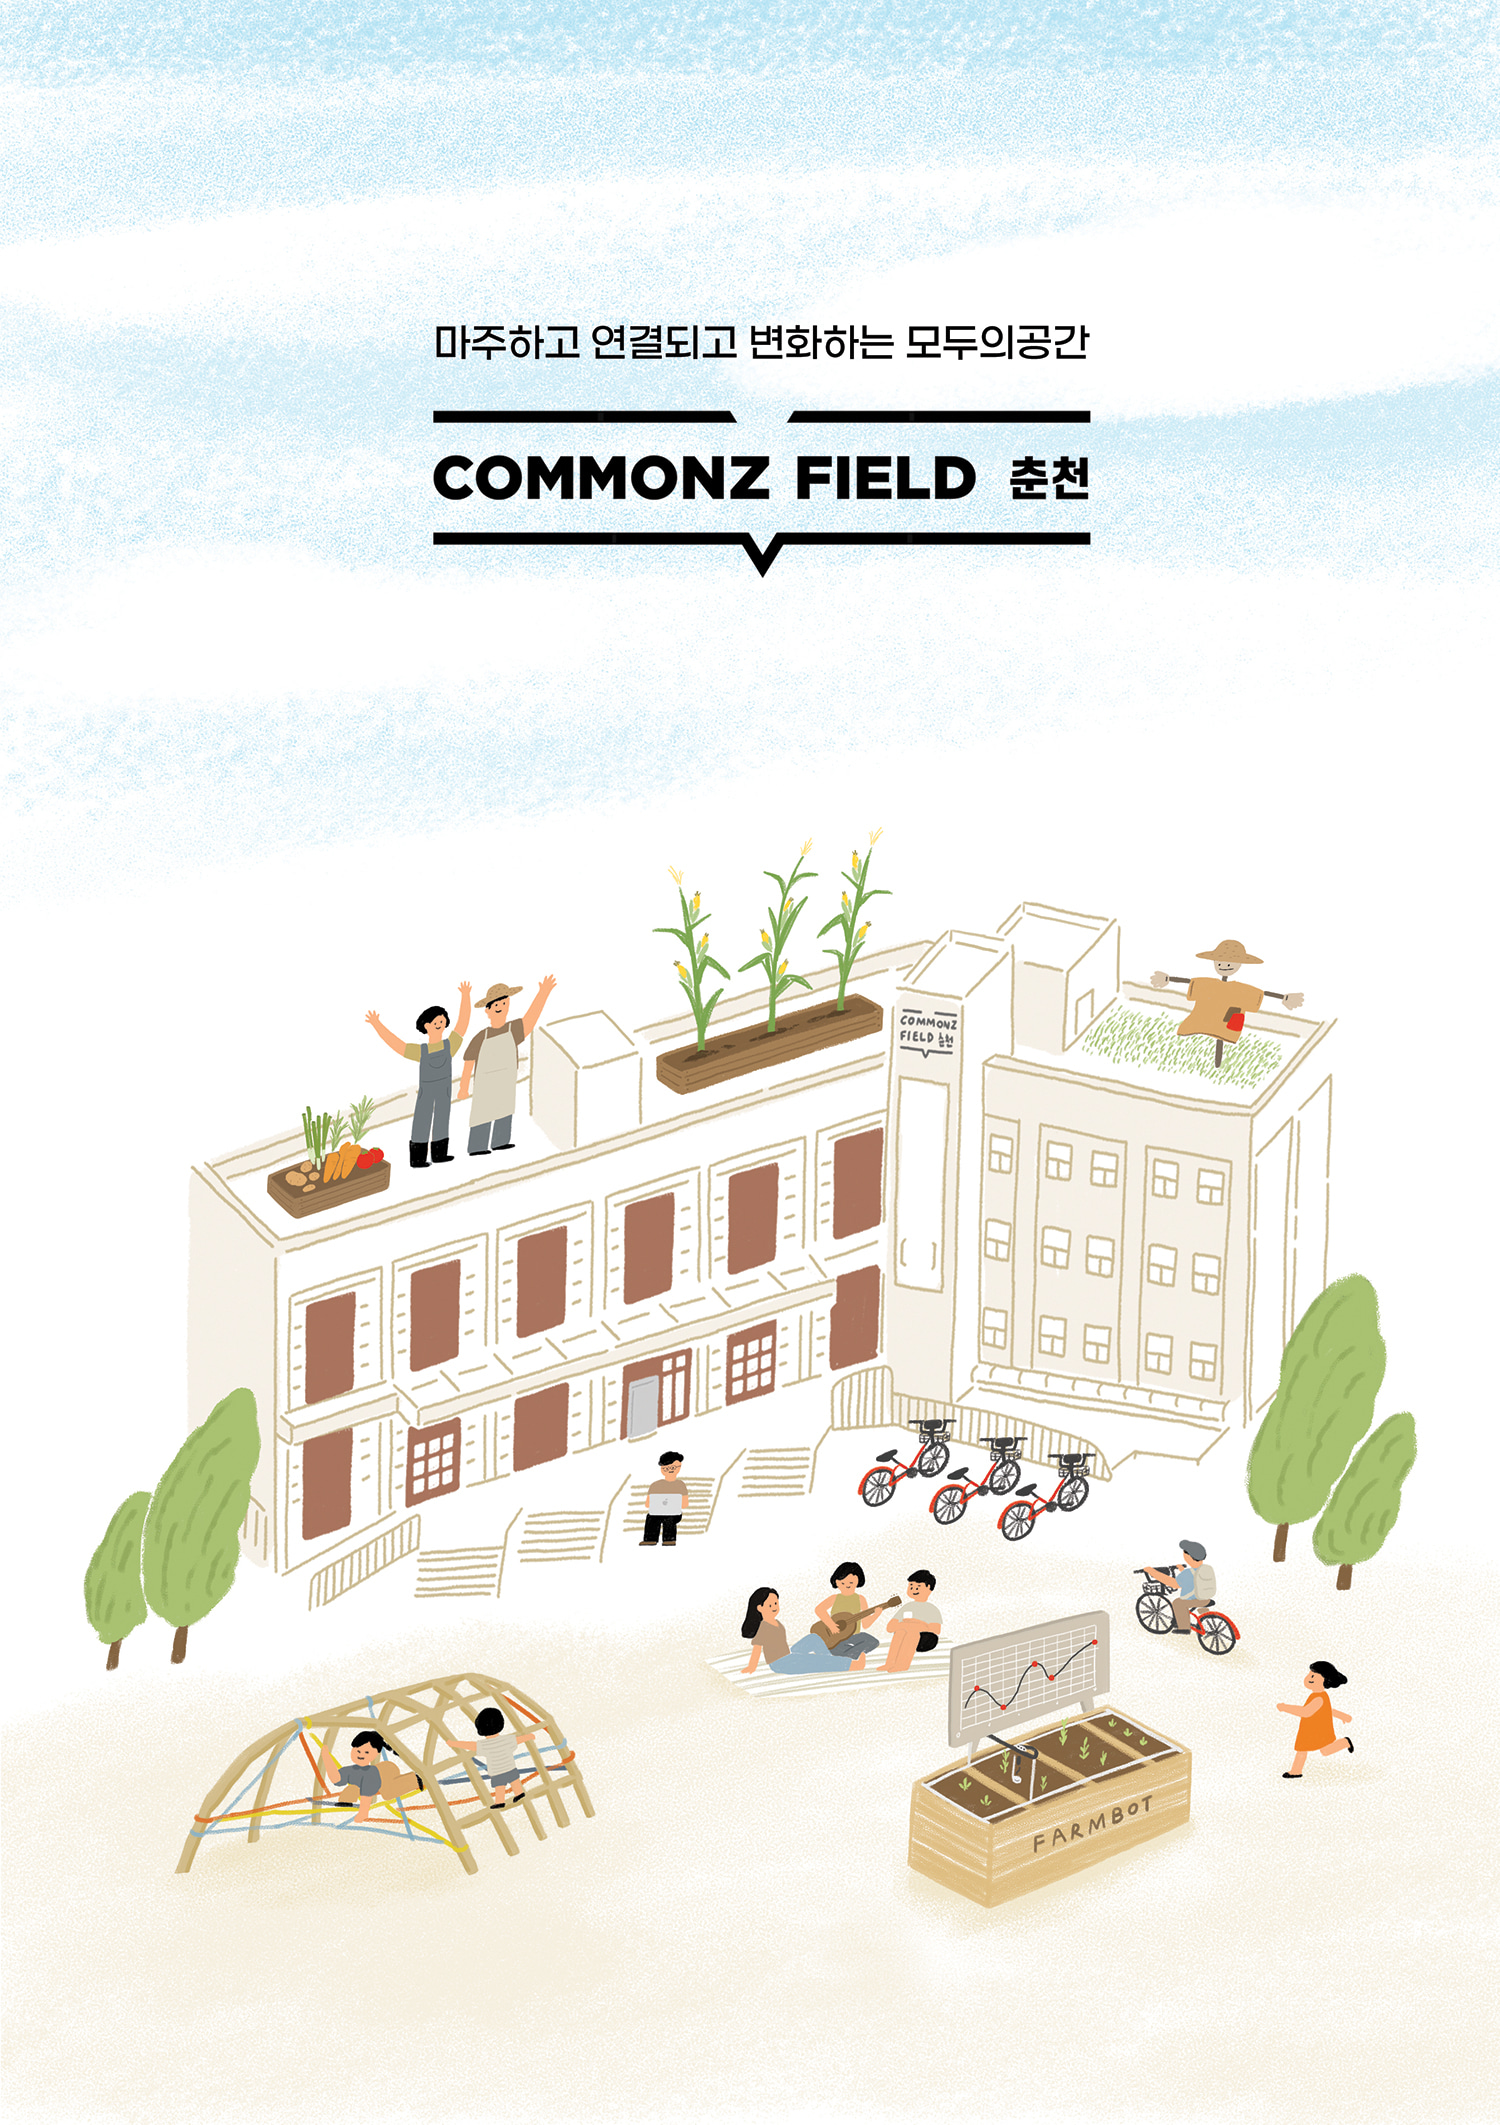 commonz field